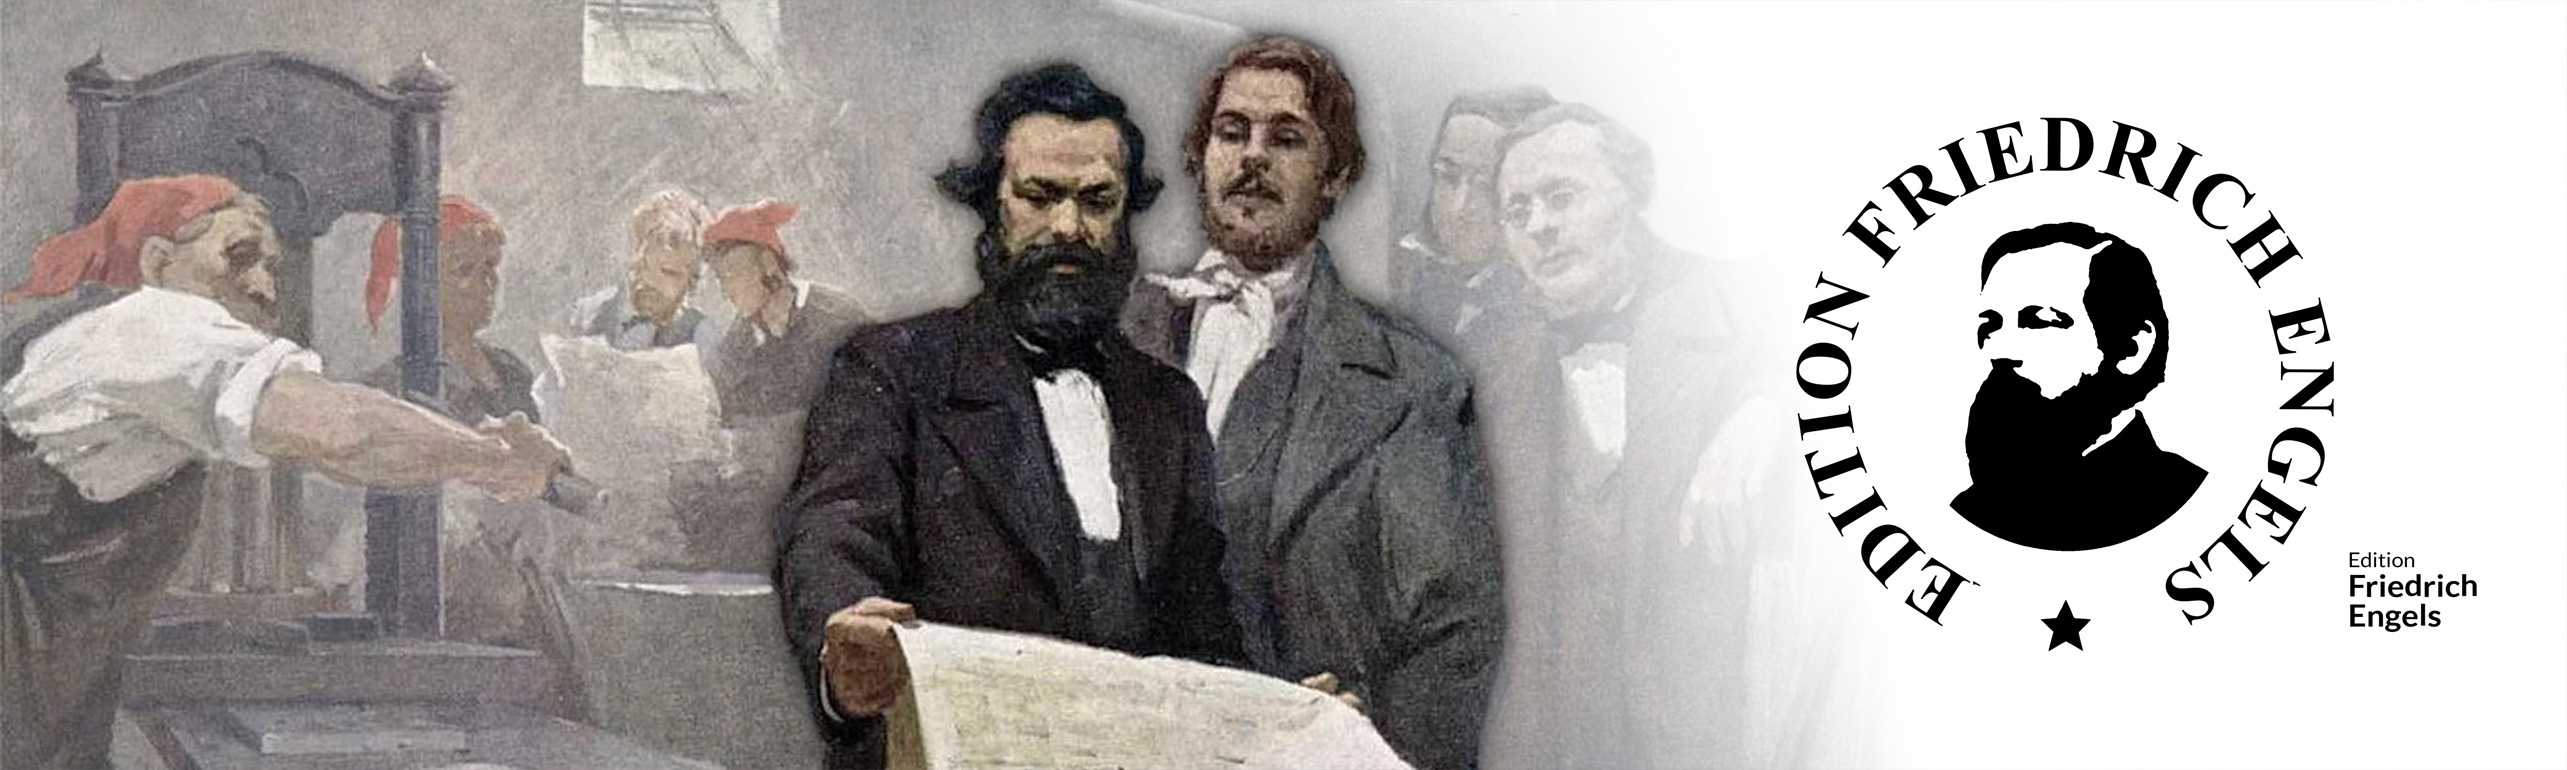 Edition Friedrich Engels Banner 3